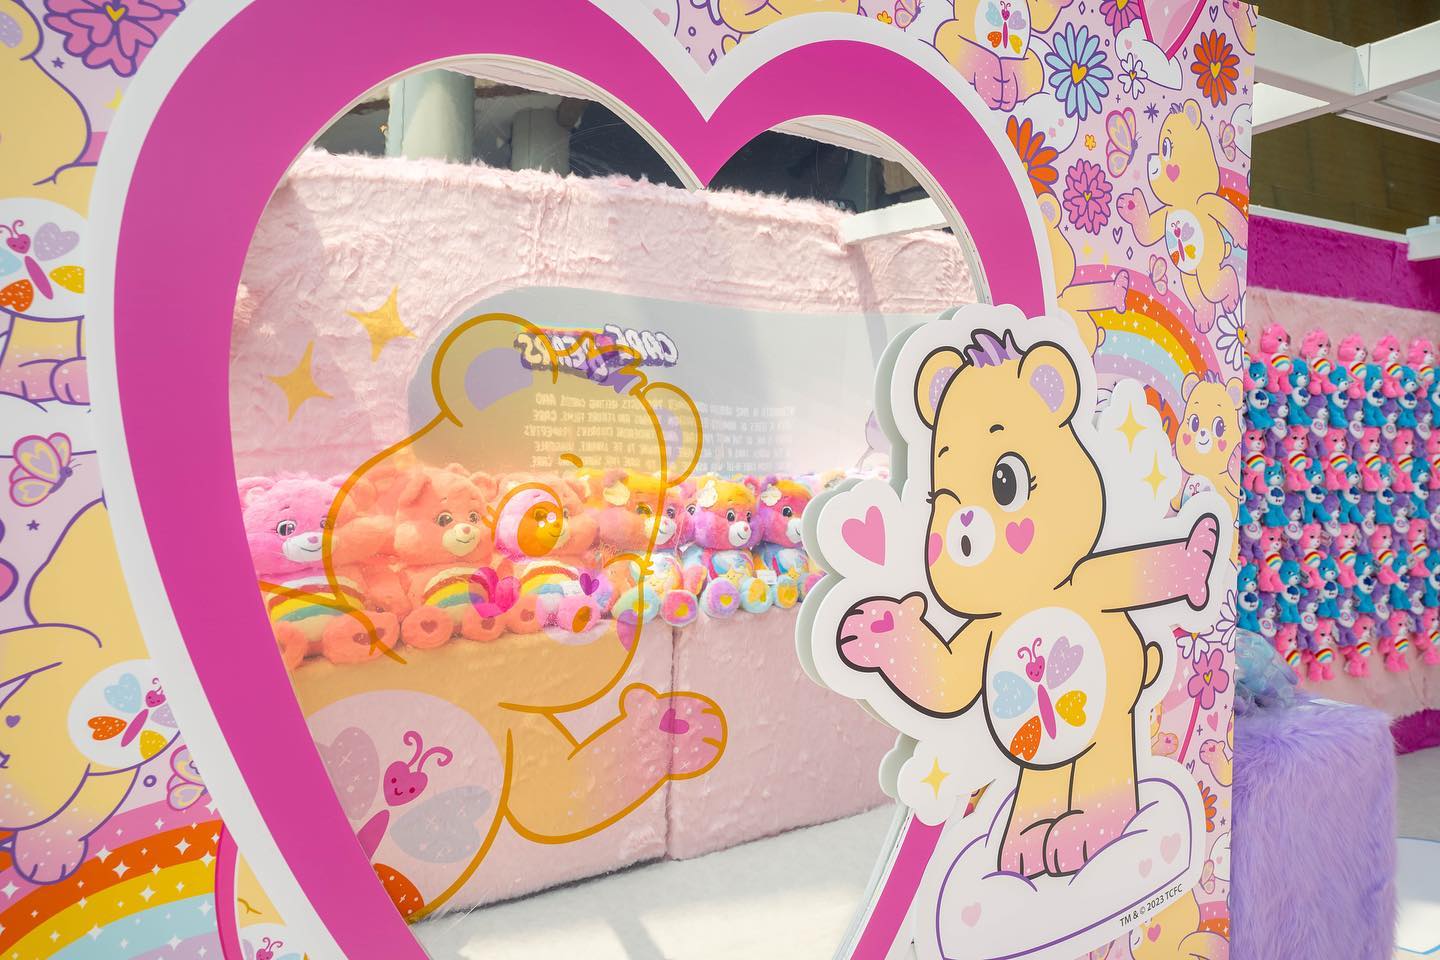 Calling All Care Bears: Kurimu Unveils a Sugary-Sweet Pop-Up